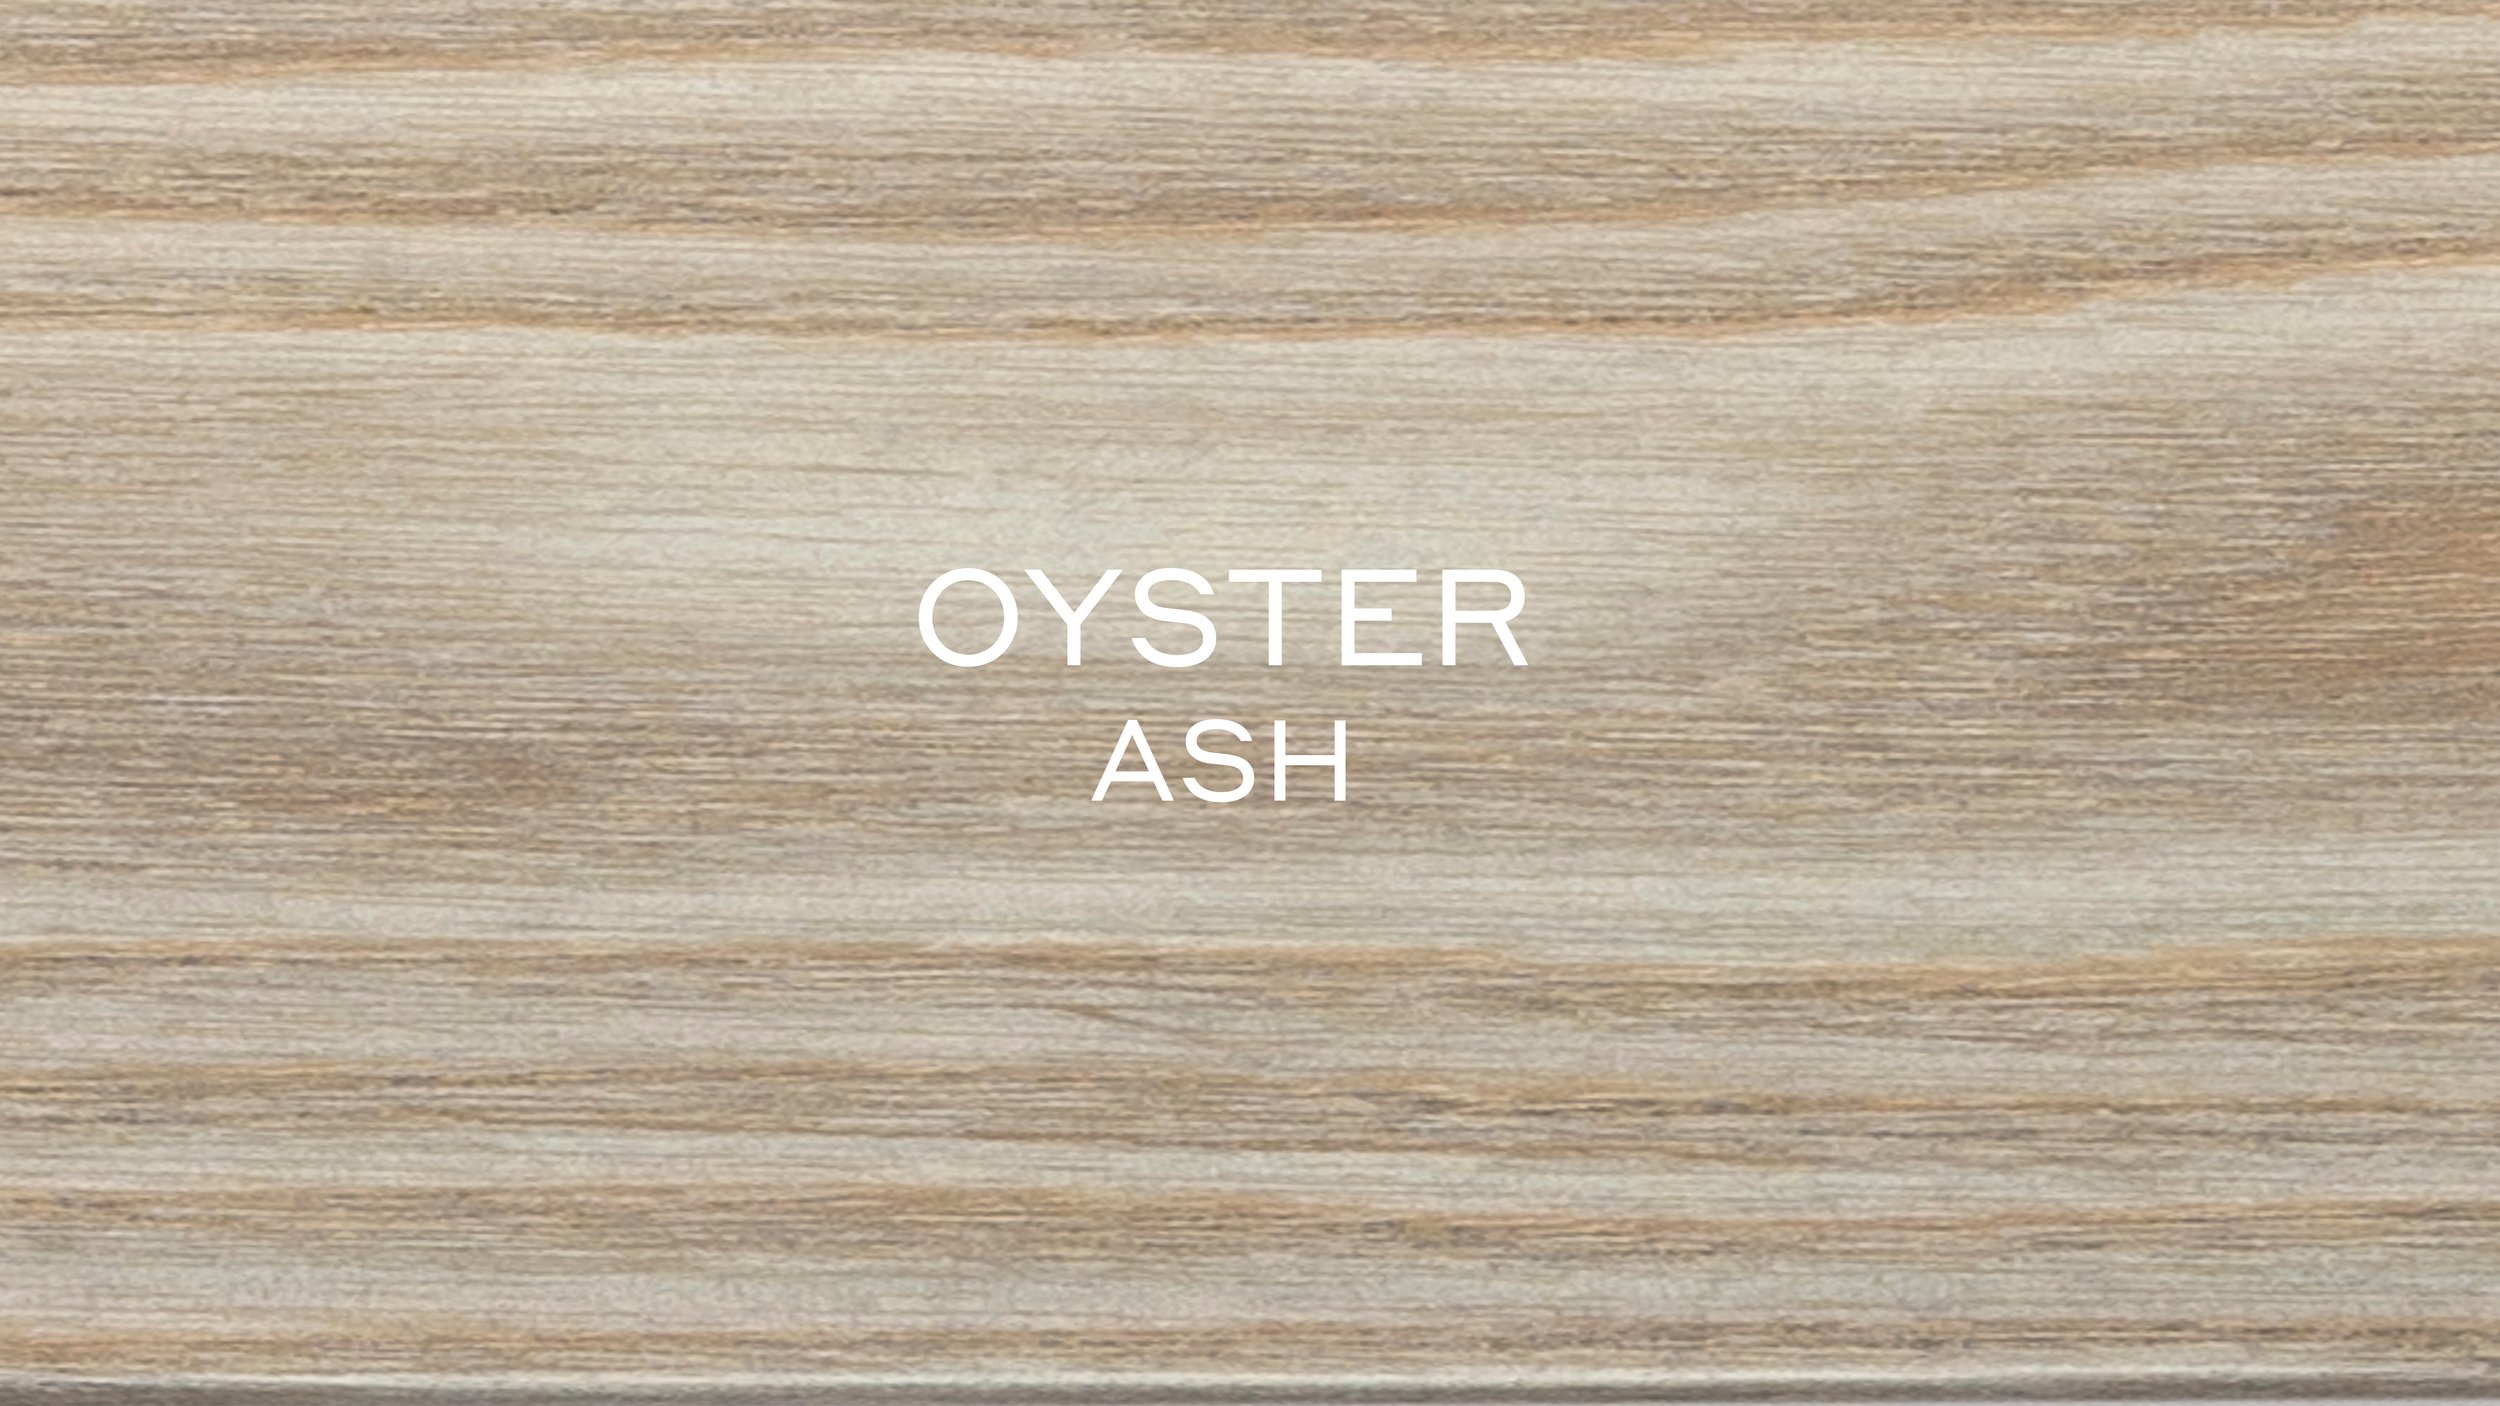 OYSTER ASH.jpg